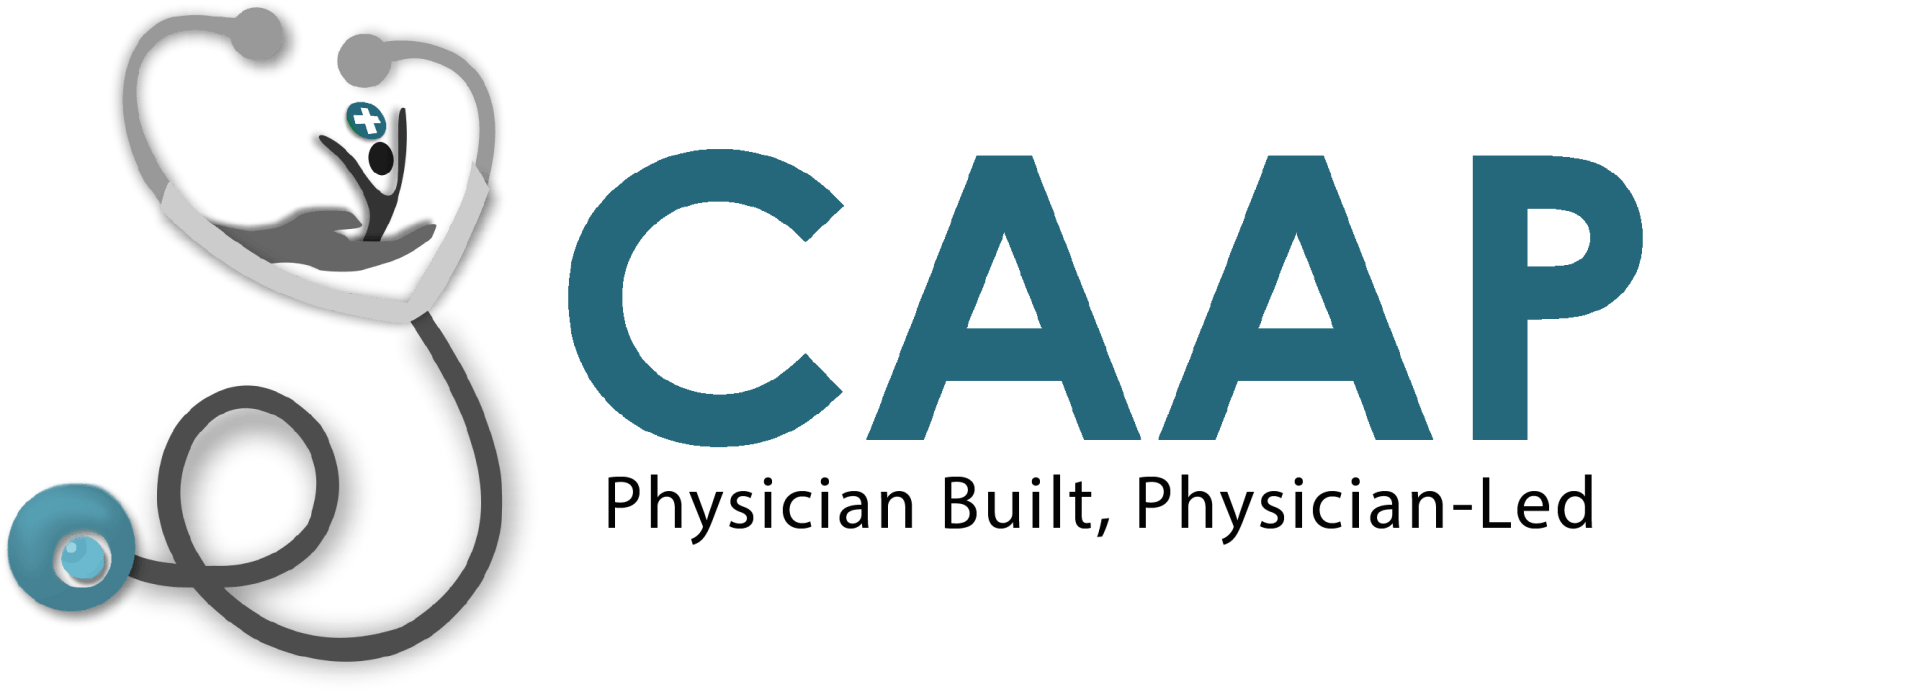 CAAP Physician Network